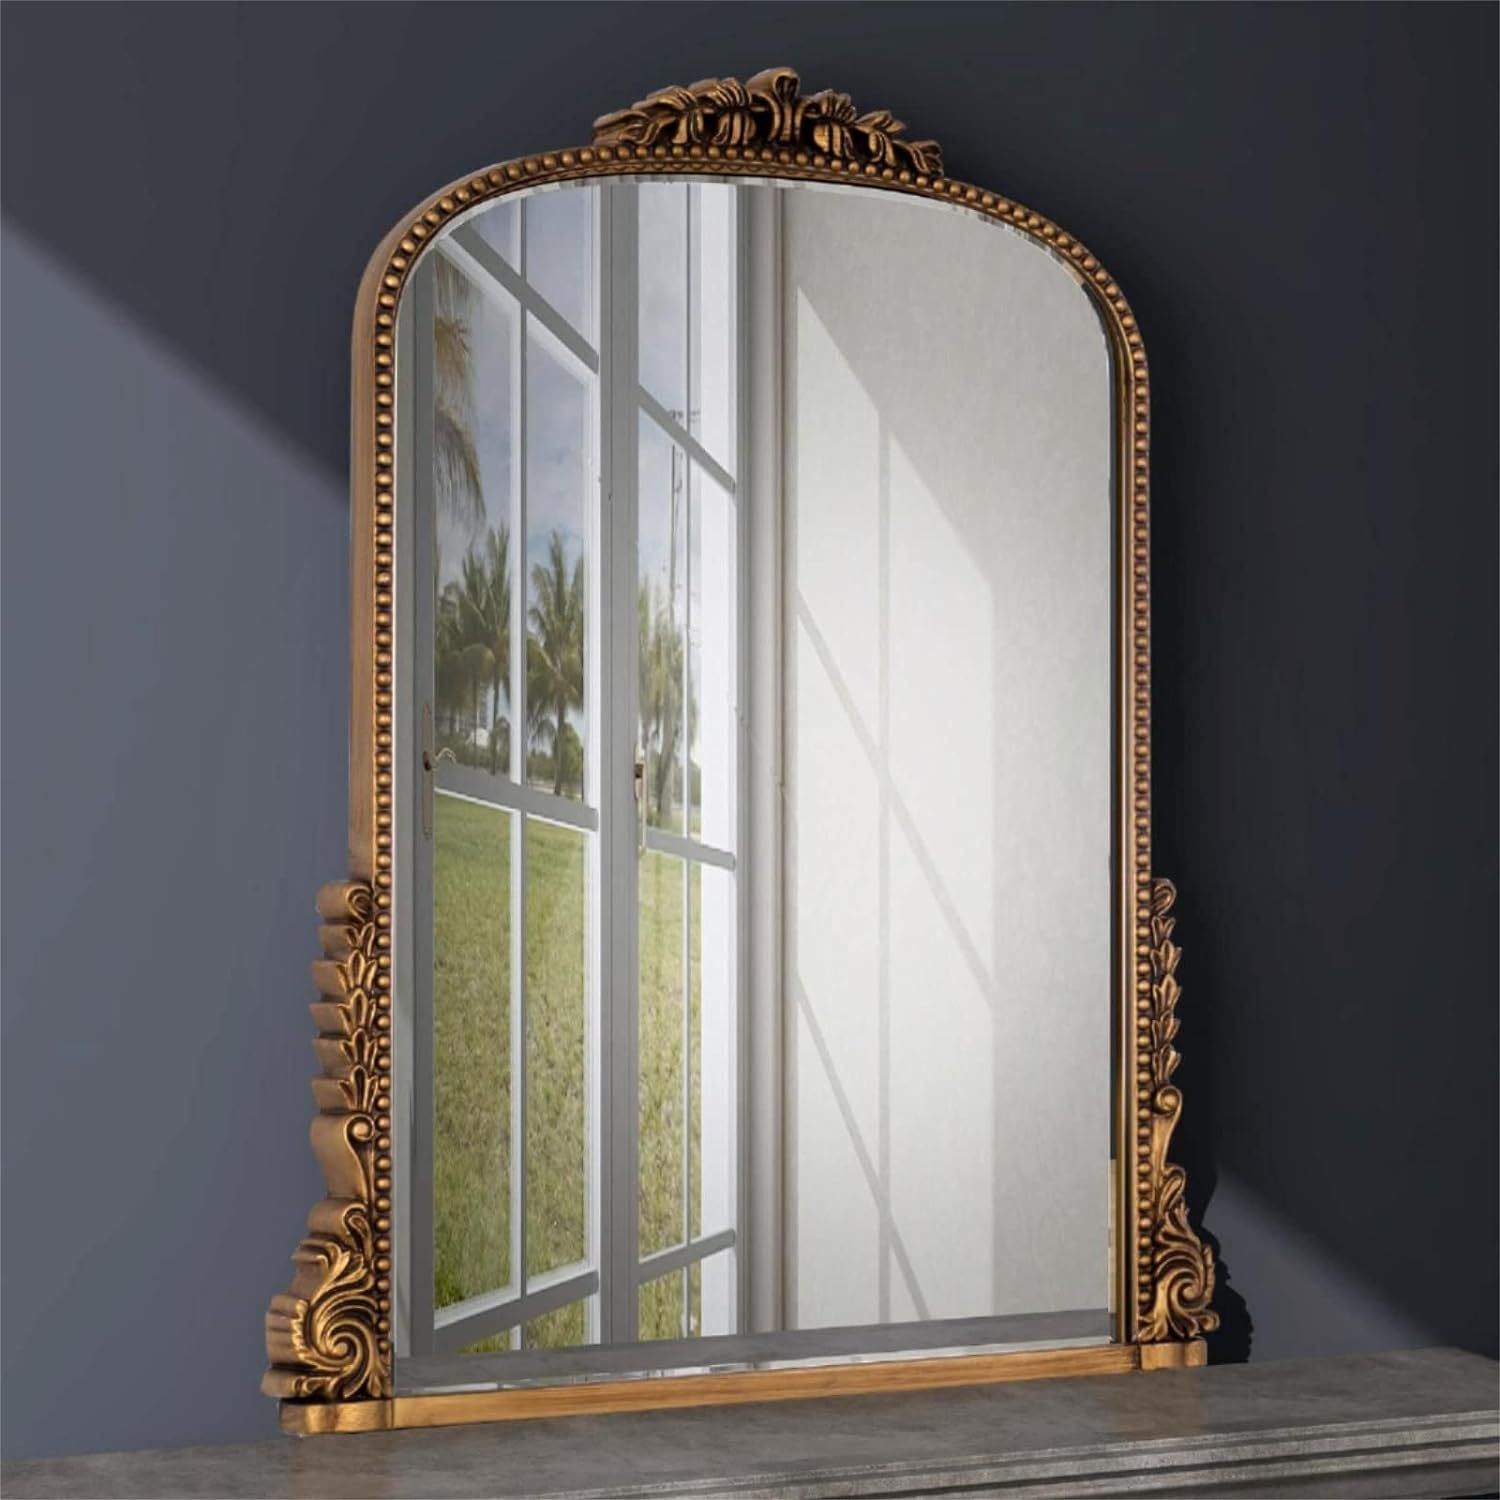 SHYFOY Antique-Gold Wall Mirror Baroque Ornate Mirrors for Wall Decor, Decorative Arche Mirrors f... | Amazon (US)